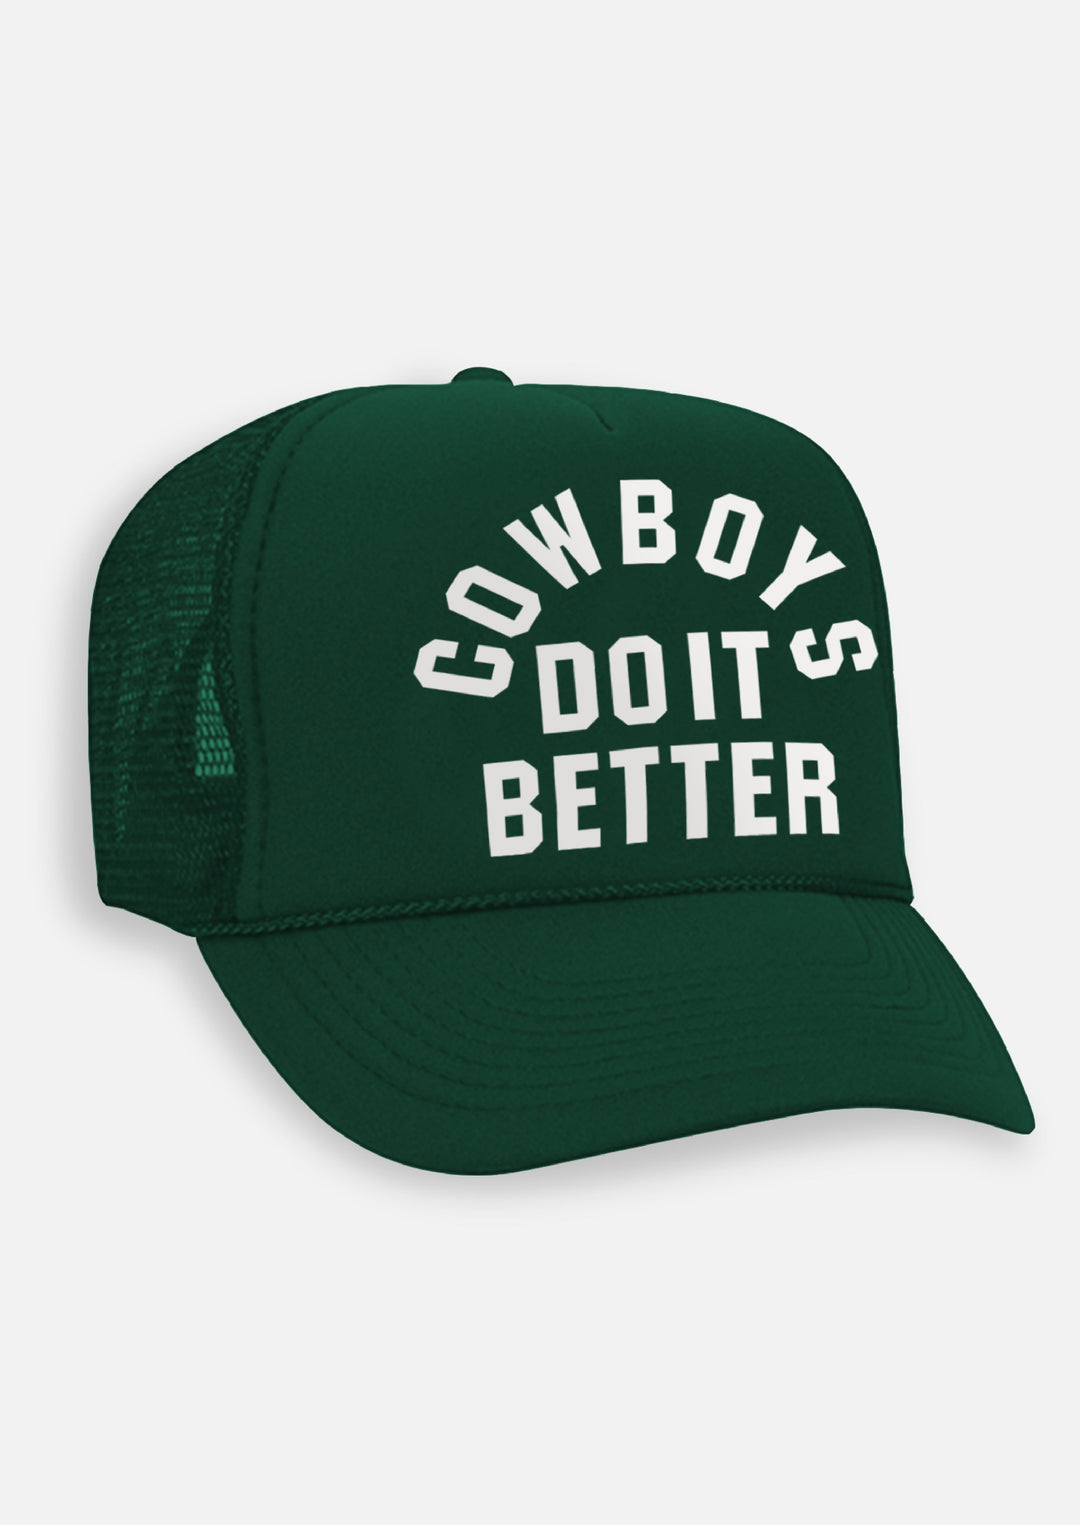 Diamond Cross Ranch COWBOYS Do It Better Trucker Hat